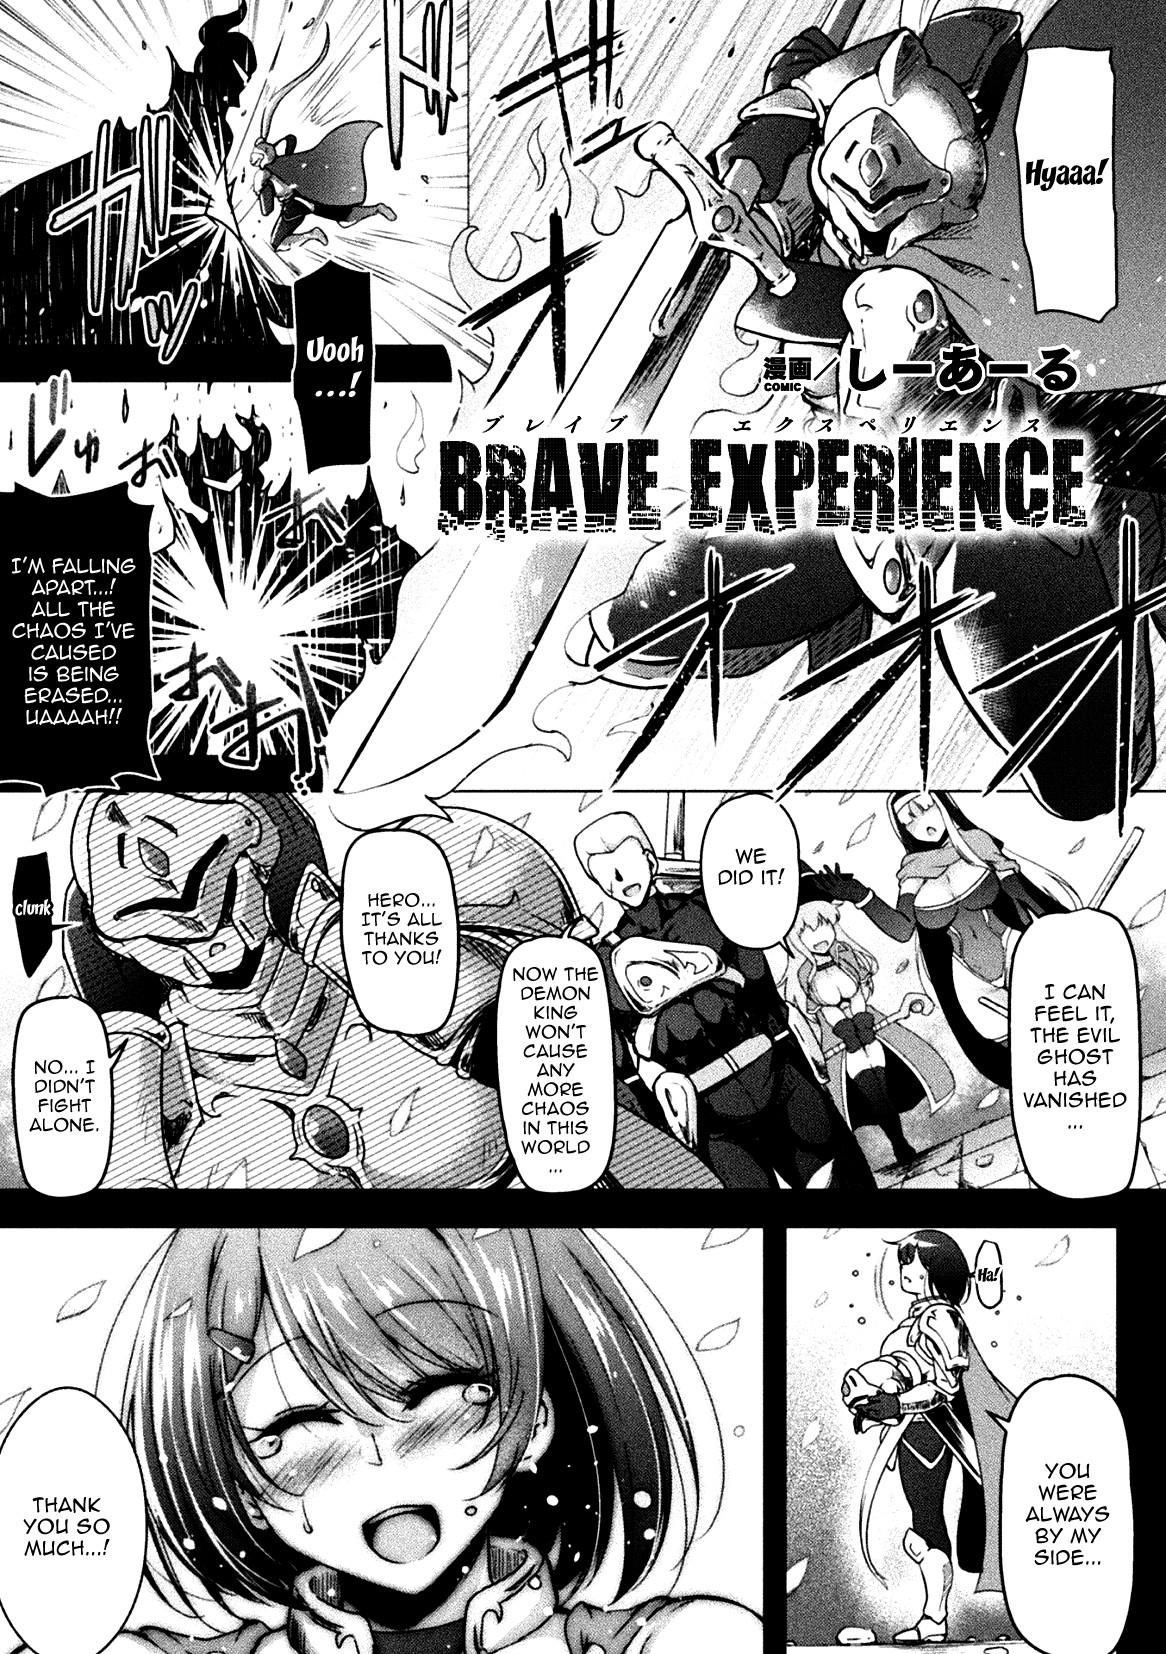 BRAVE EXPERIENCE 1